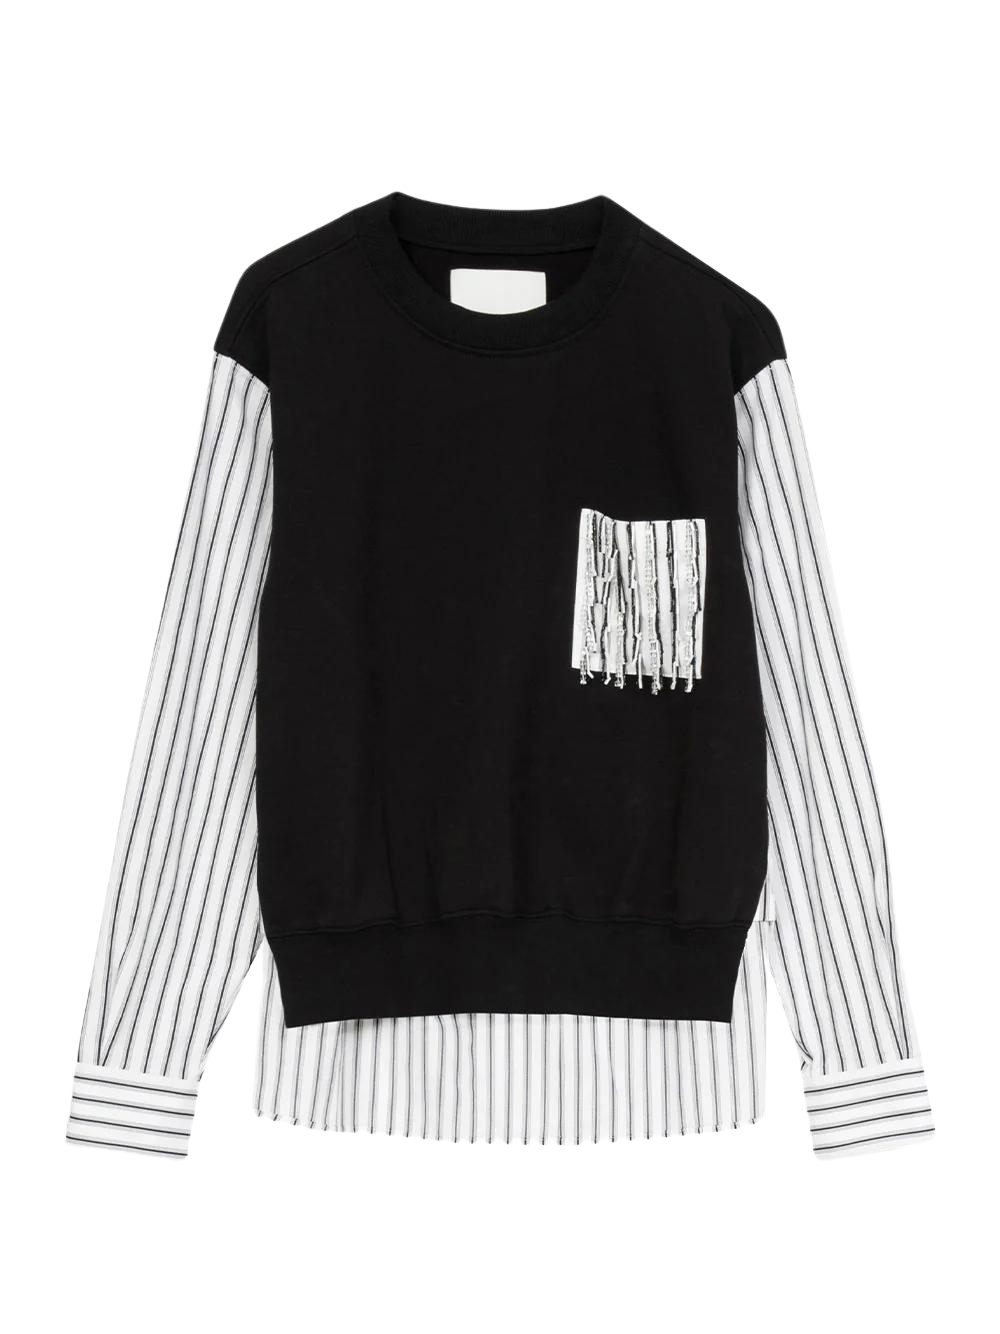 Striped Fringe Trim Sweatshirt (Black Multi Stripe)